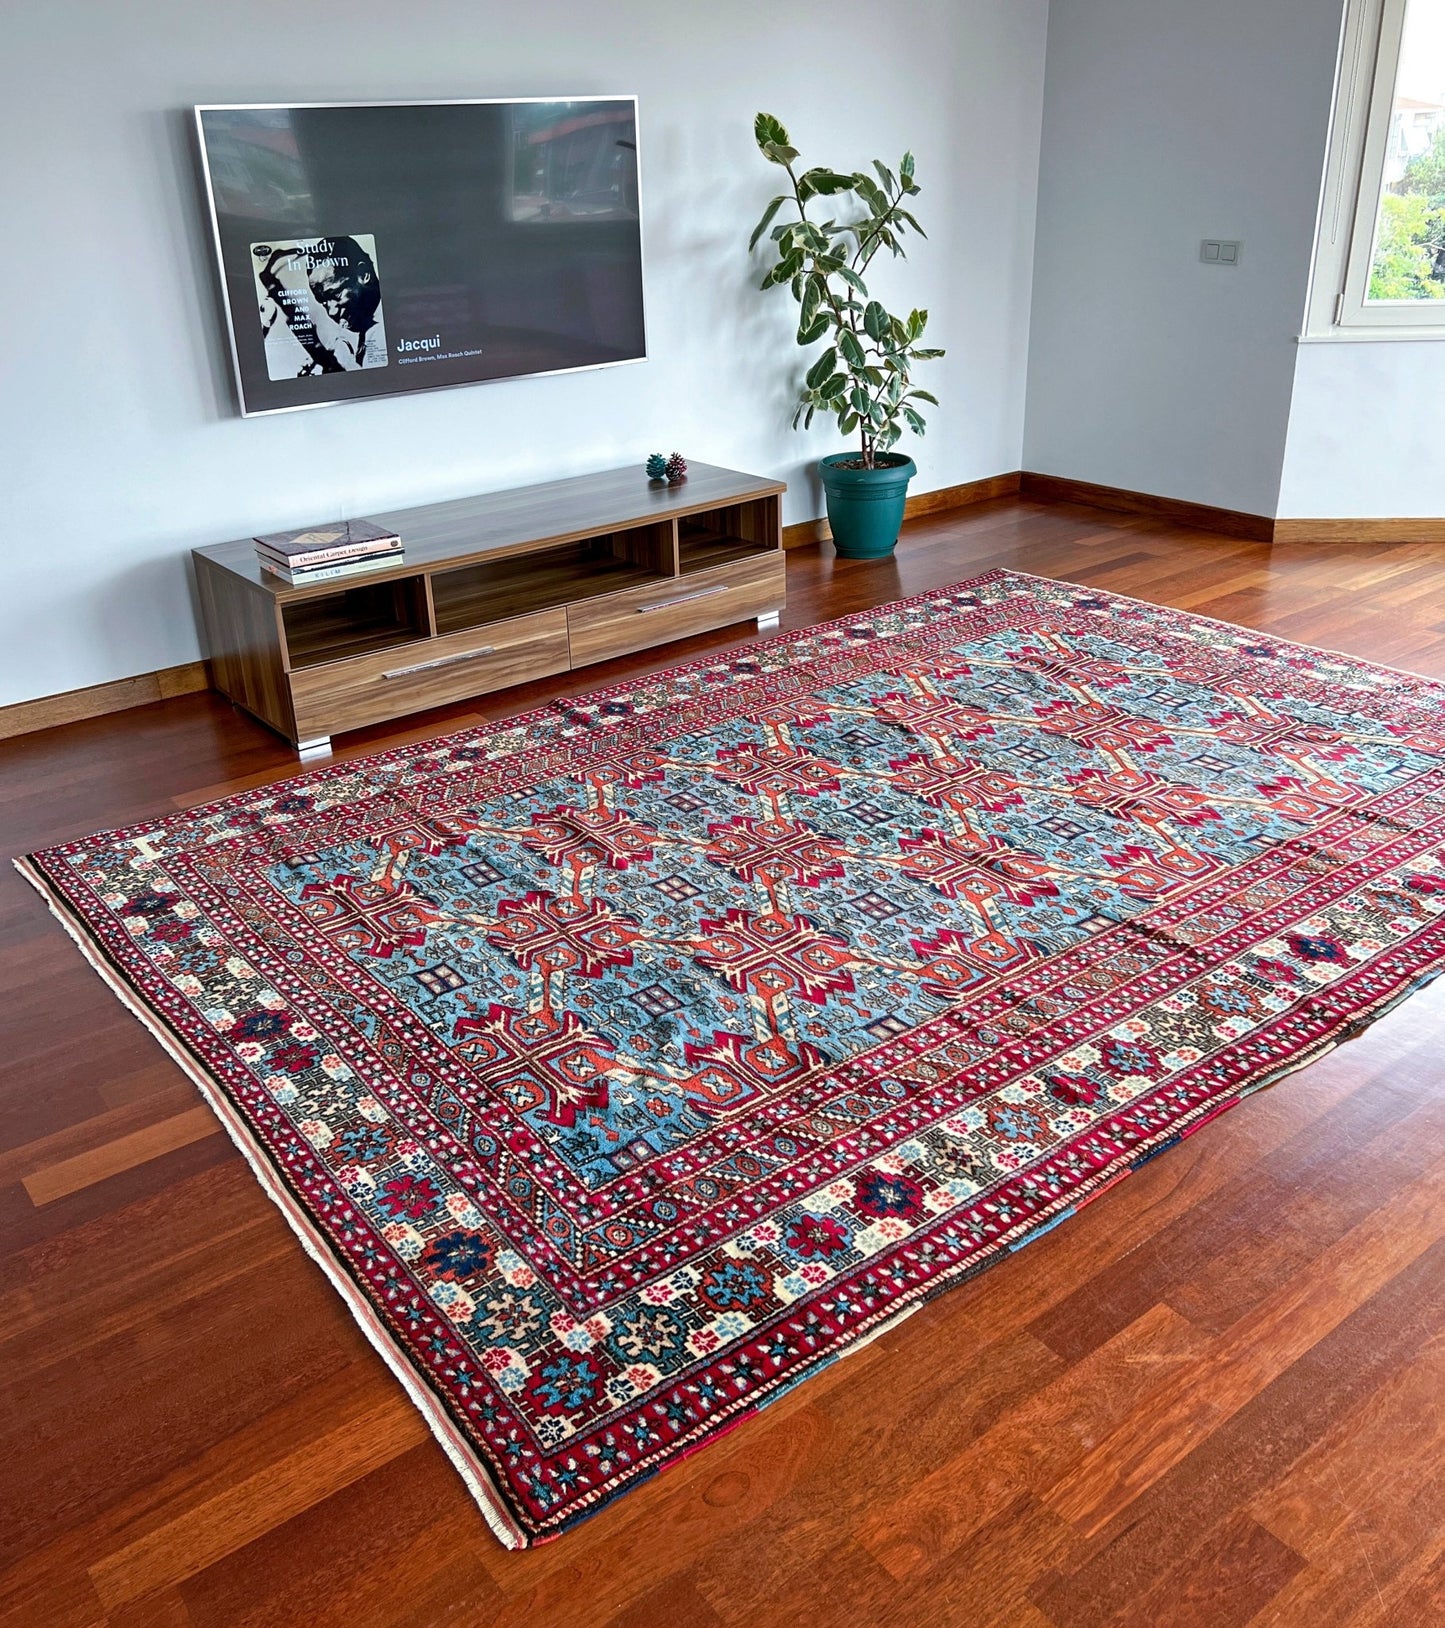 Yagcibedir large vintage turkish rug. Oriental rug shop palo alto berkeley san francisco bay area Buy rug online